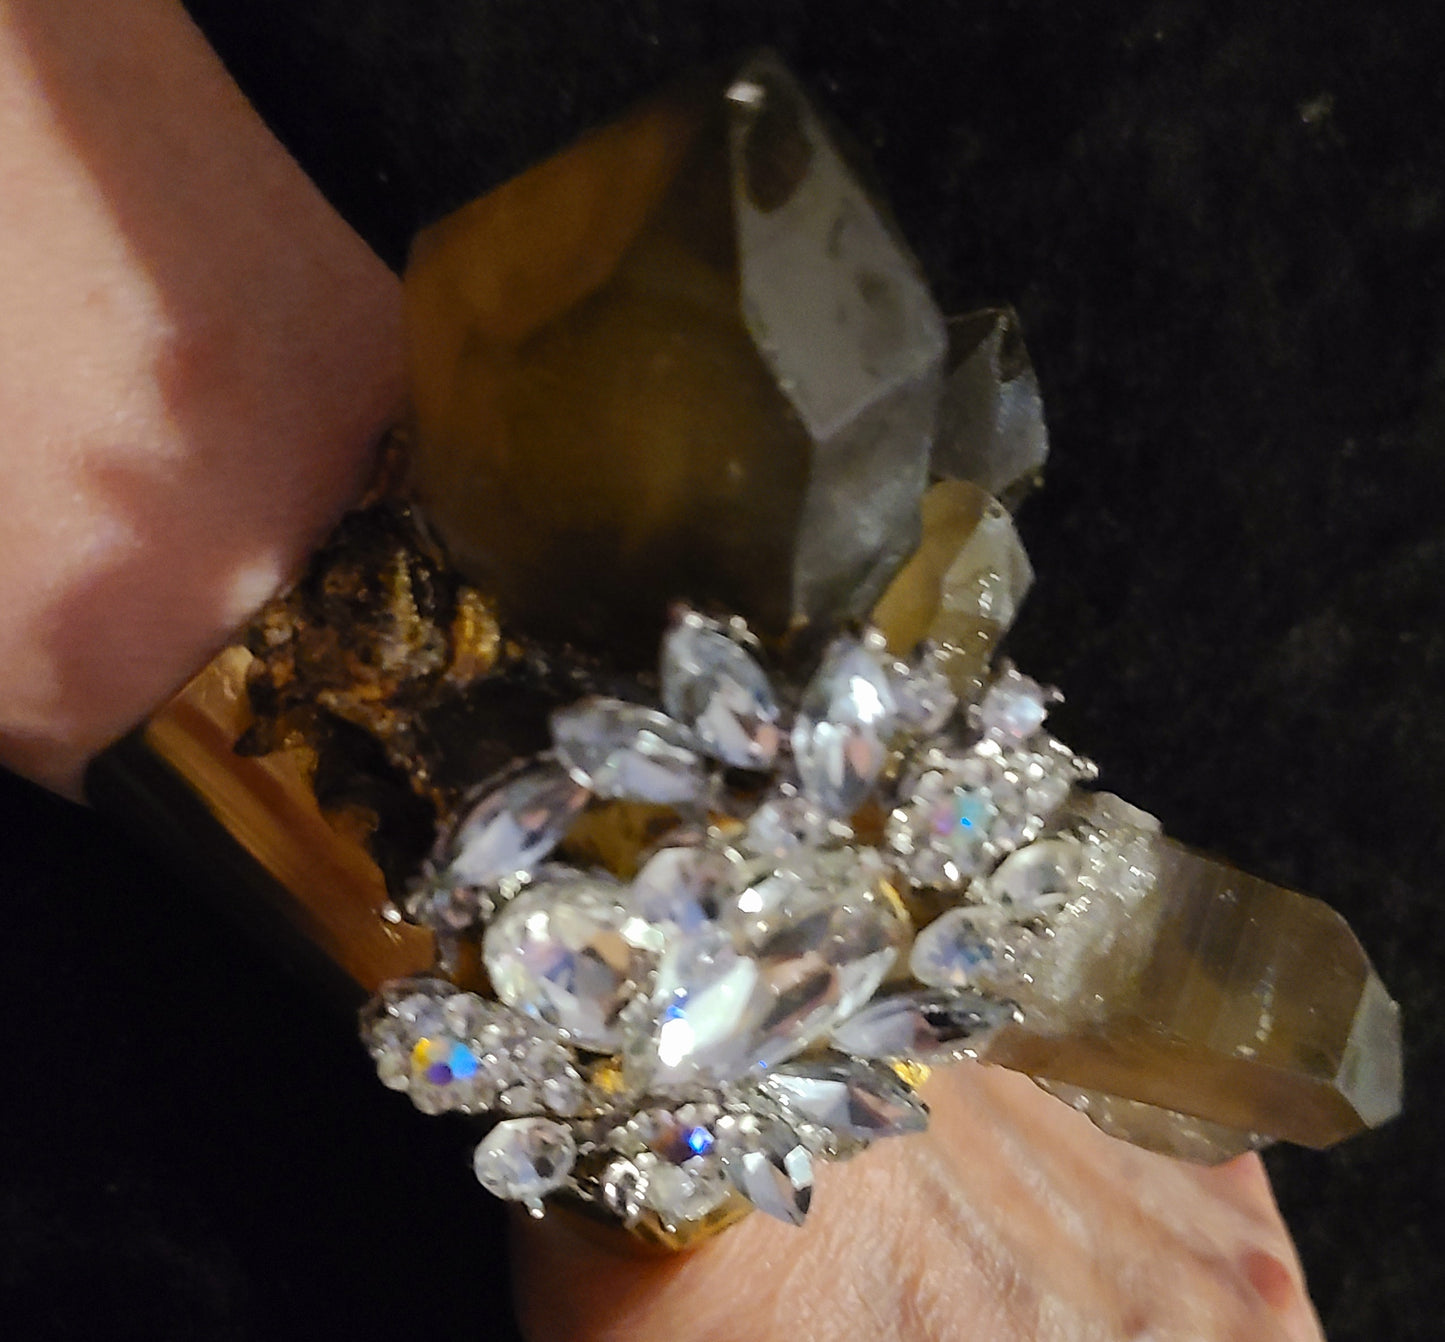 Gemmy Smoky Citrine & Rhinestone Jewel Statement Cuff, High Glamour Wrist Bauble, Showstopper Artisan Jewelry